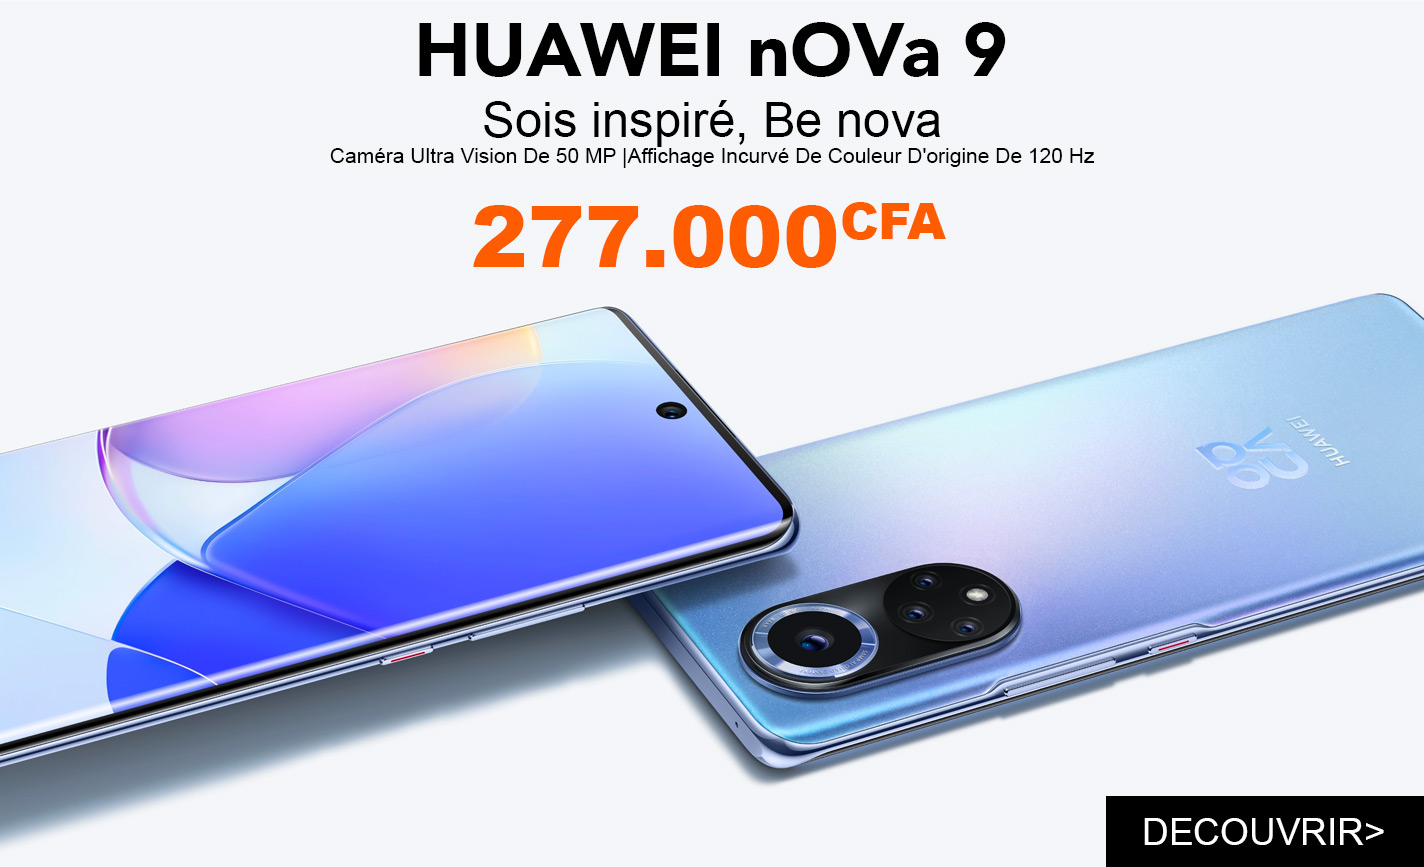 Huawei NOVa 9